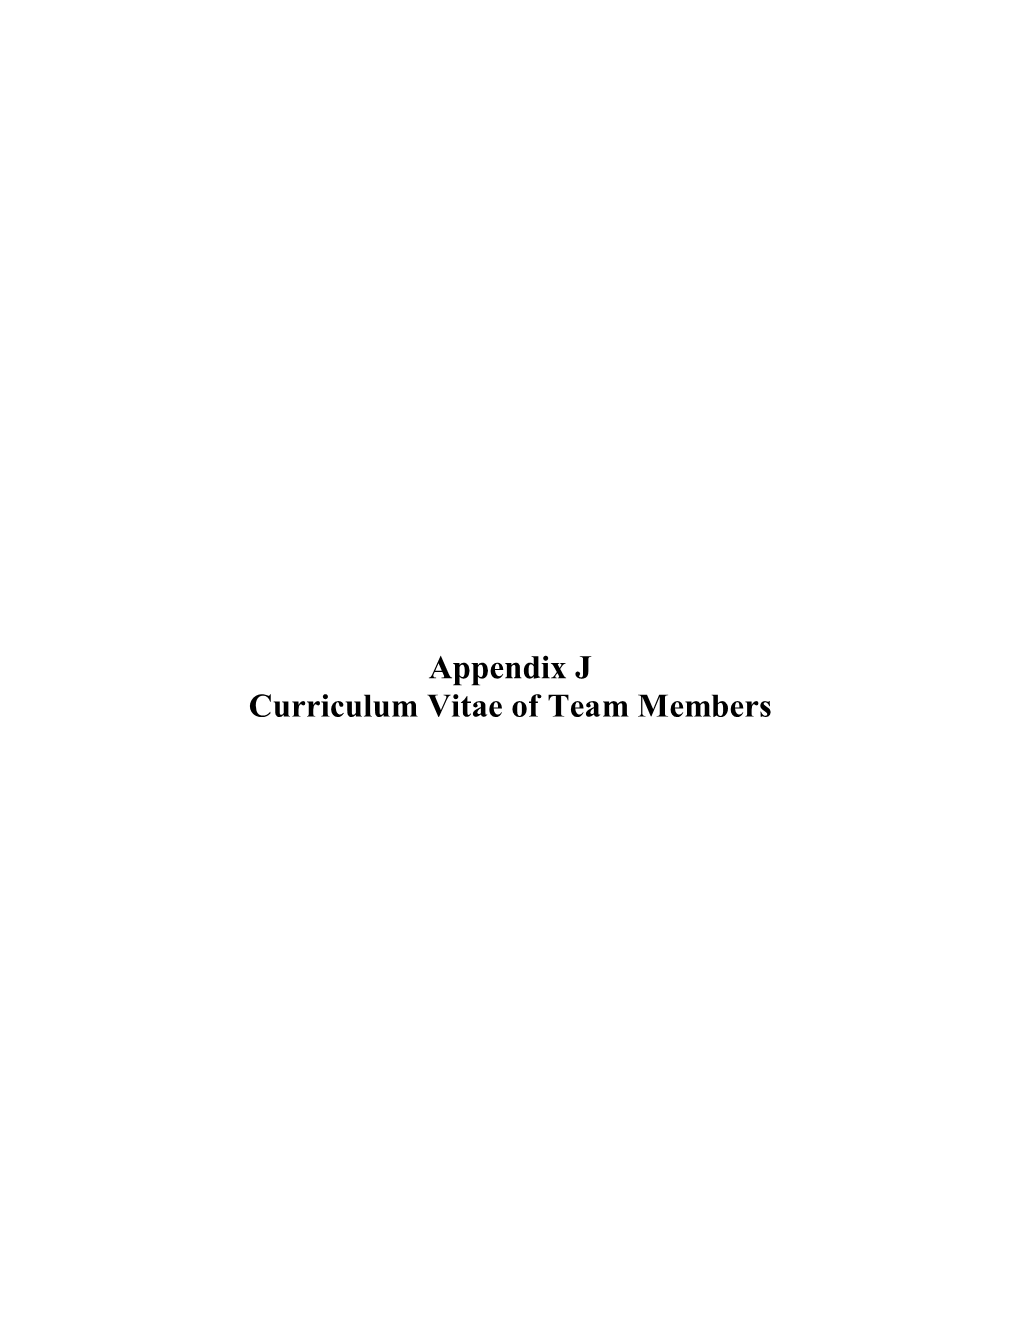 Appendix J Curriculum Vitae of Team Members